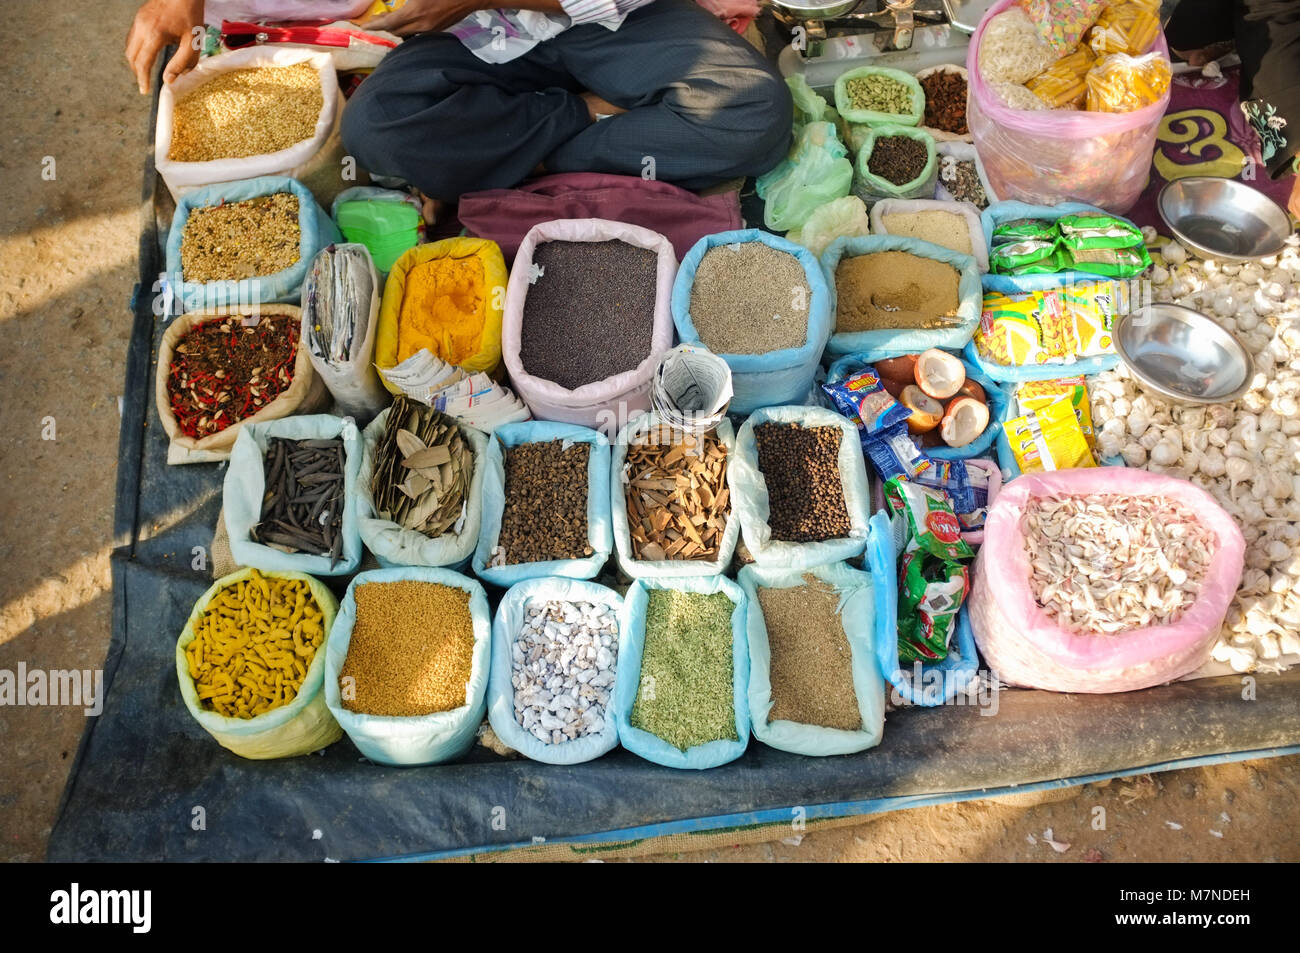 GOA, INDIA- FEBRUARY 2, 2015: Street salesman sitting at spice stand. Stock Photo